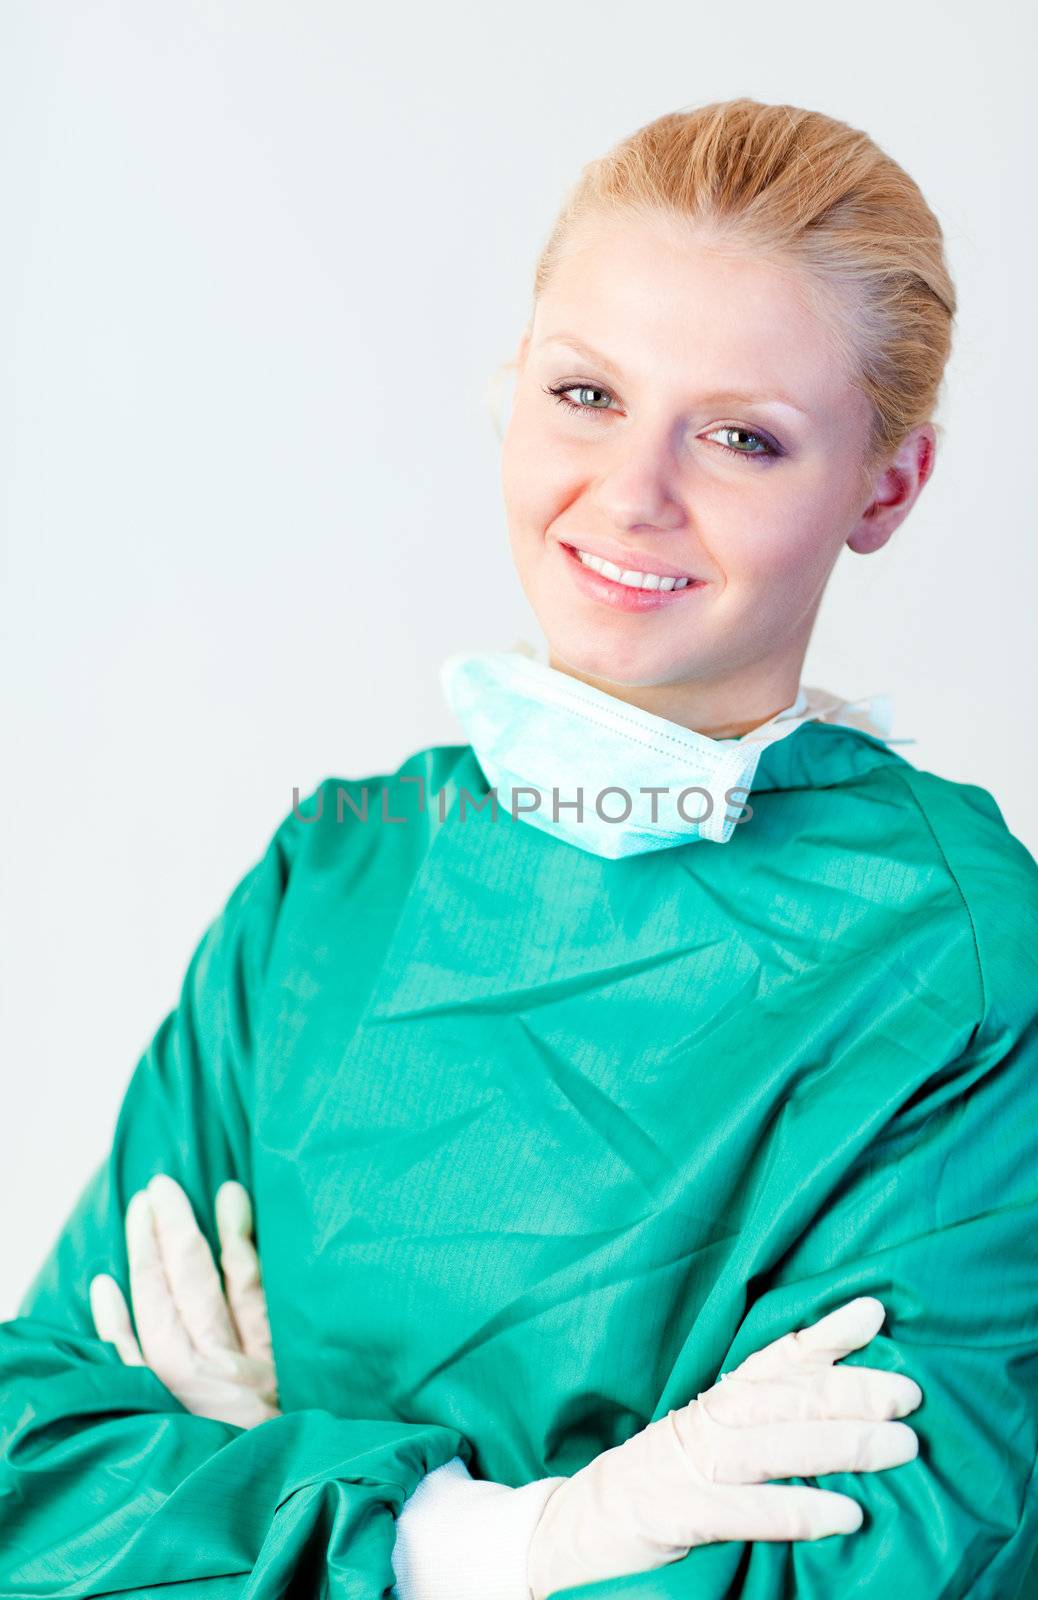 Female Surgeon smiling by Wavebreakmedia